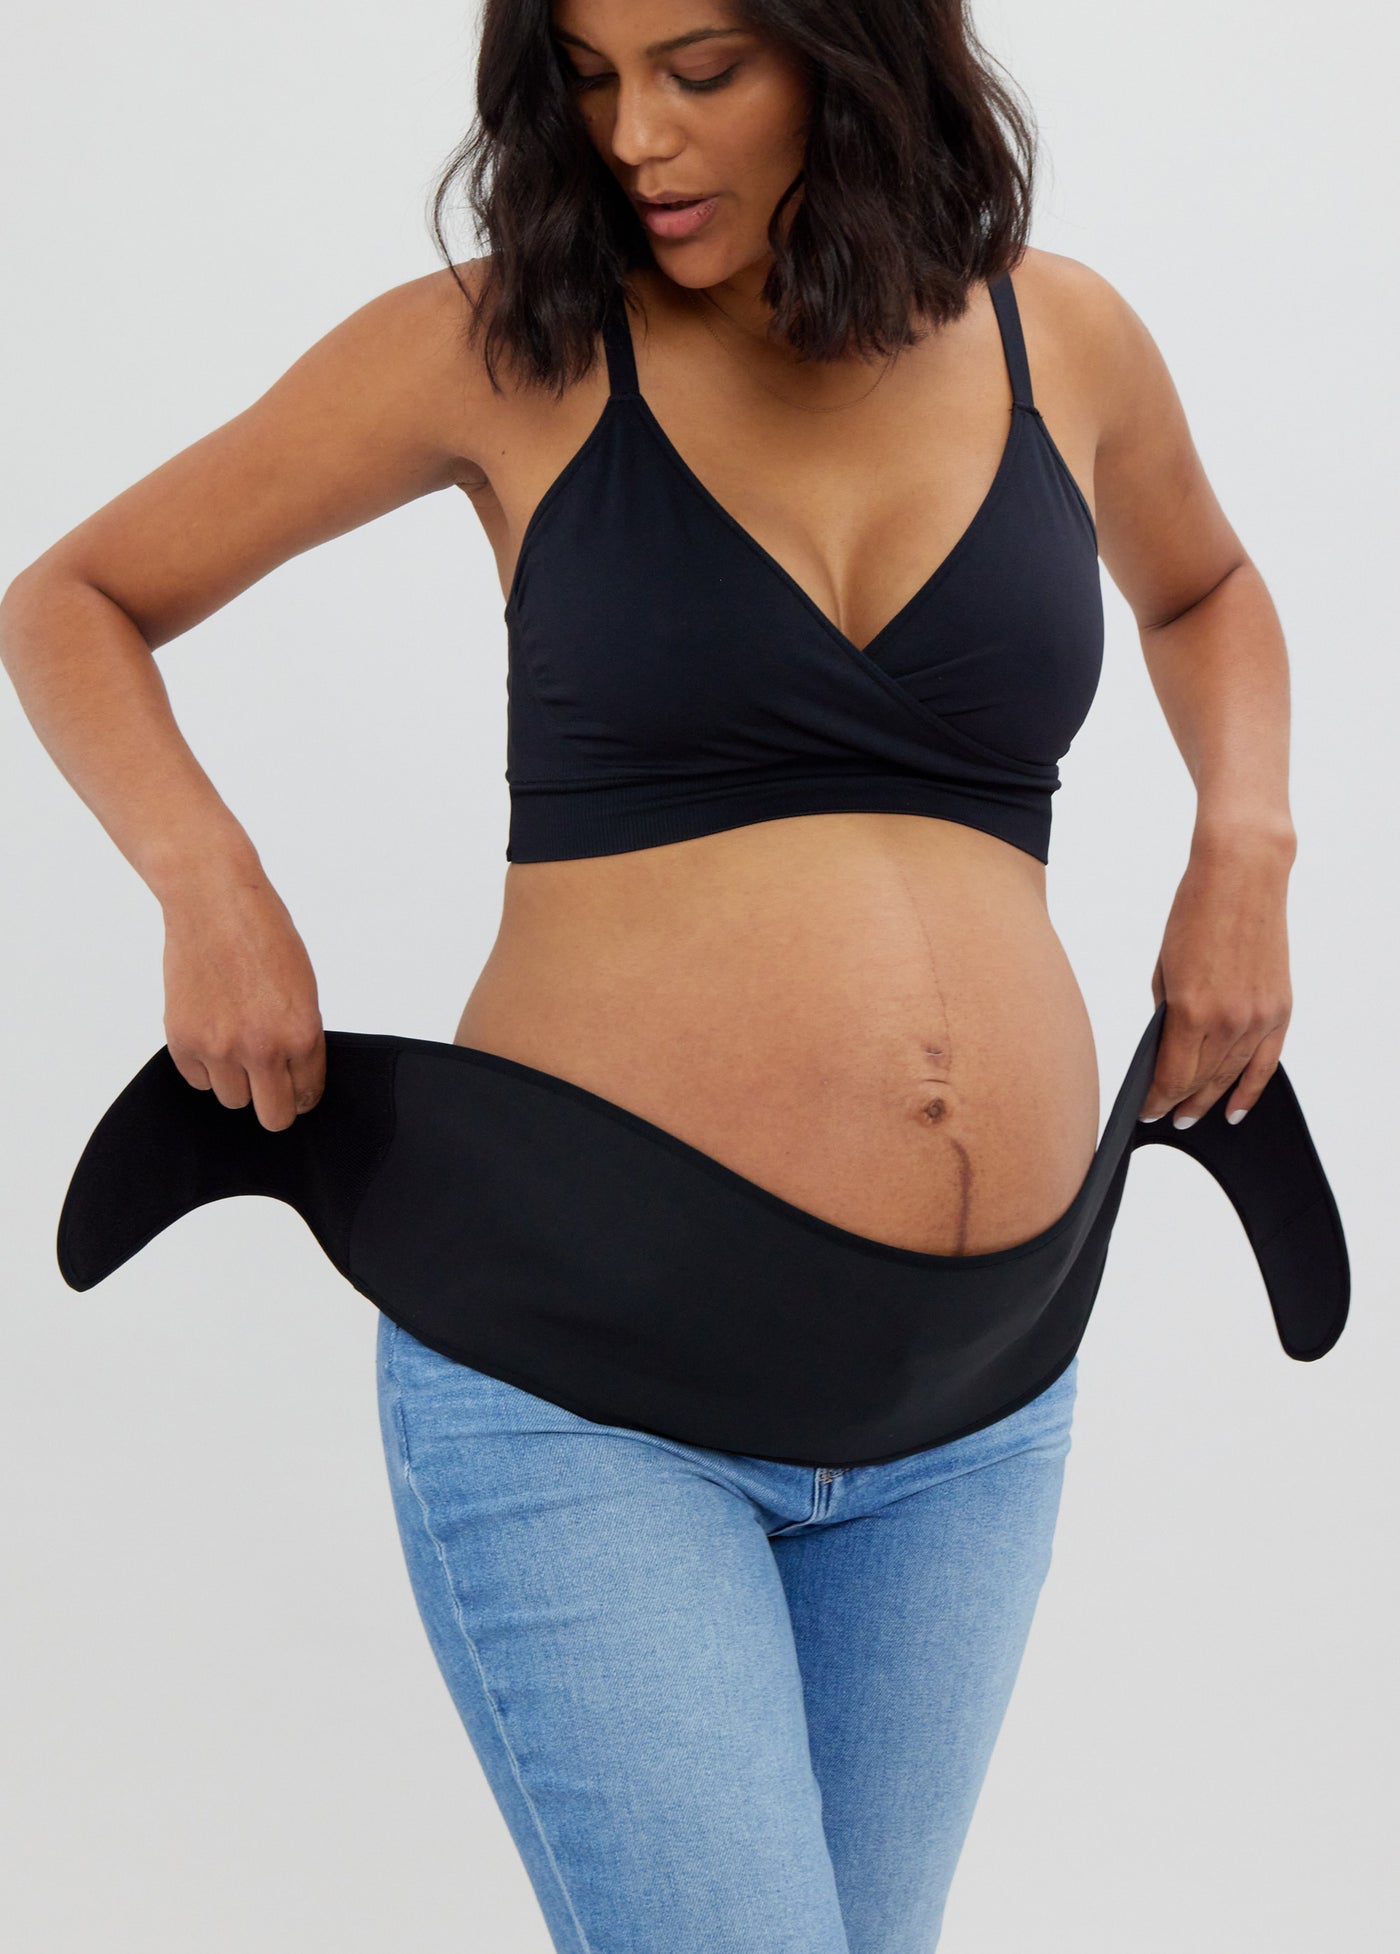 Maternity support belt - Pregnancy & breastfeeding